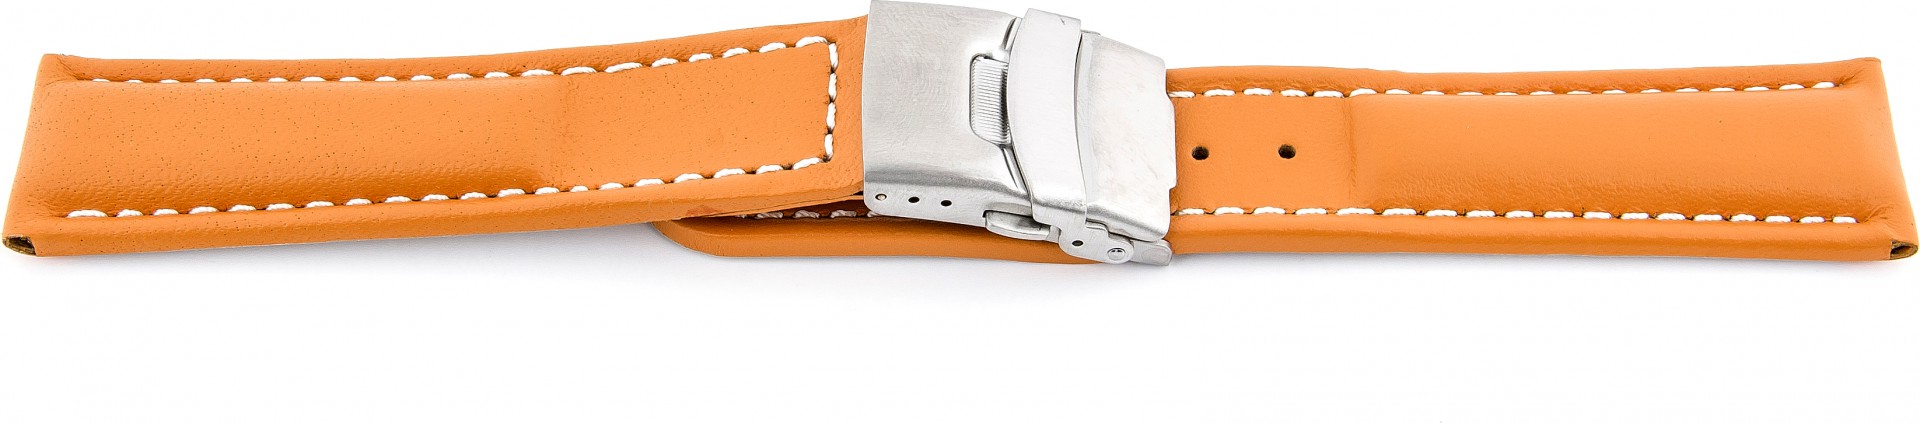   Uhrenarmband Faltschließe - Leder, glatt - Orange mit weißer Naht 